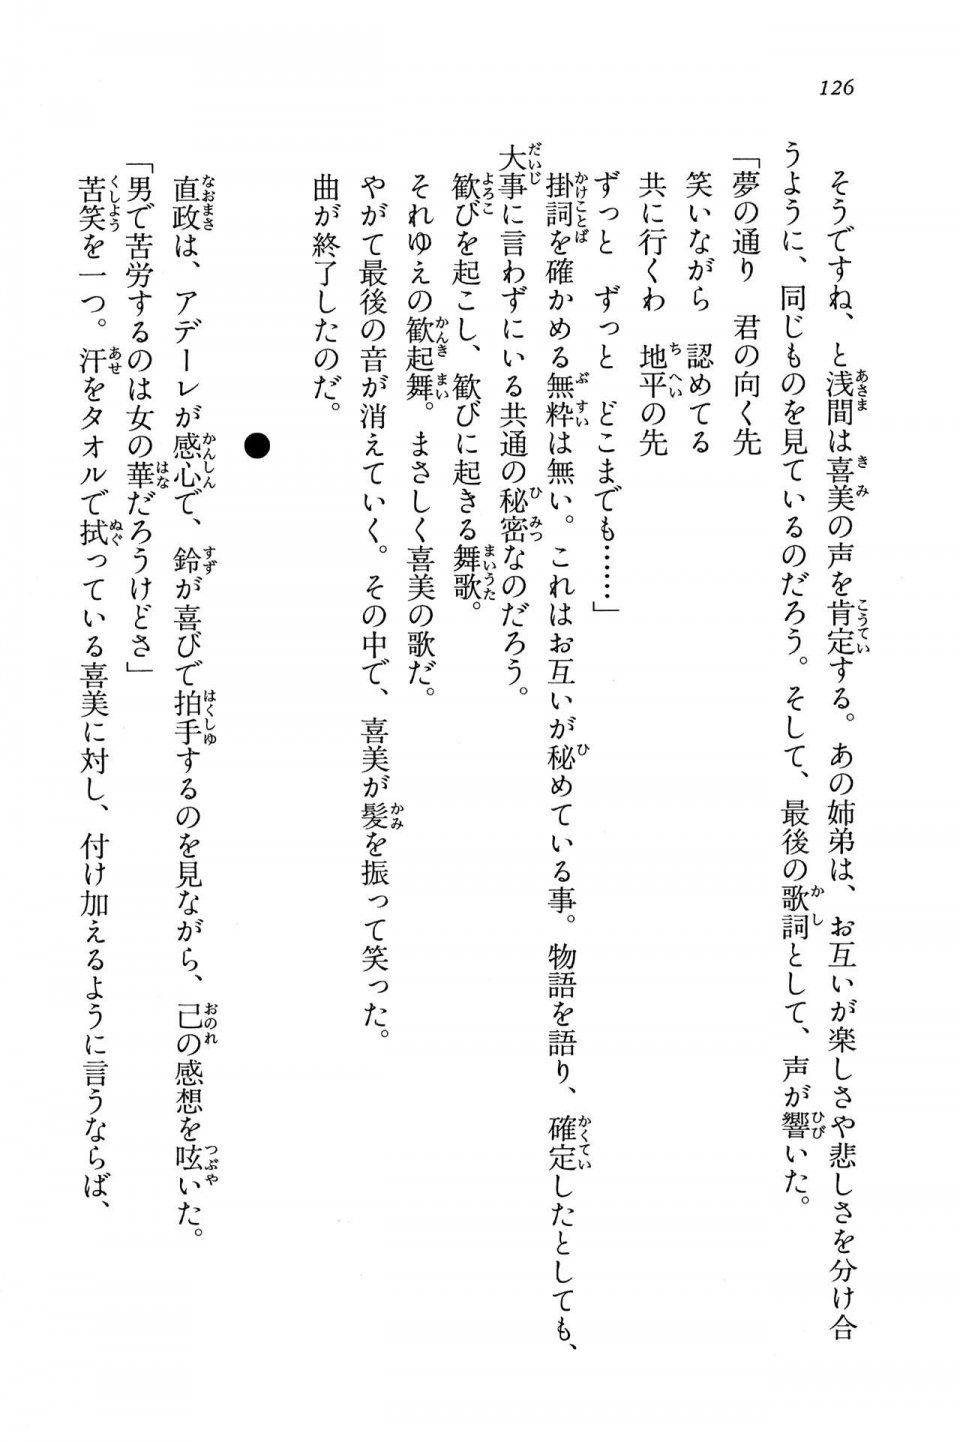 Kyoukai Senjou no Horizon BD Special Mininovel Vol 7(4A) - Photo #130